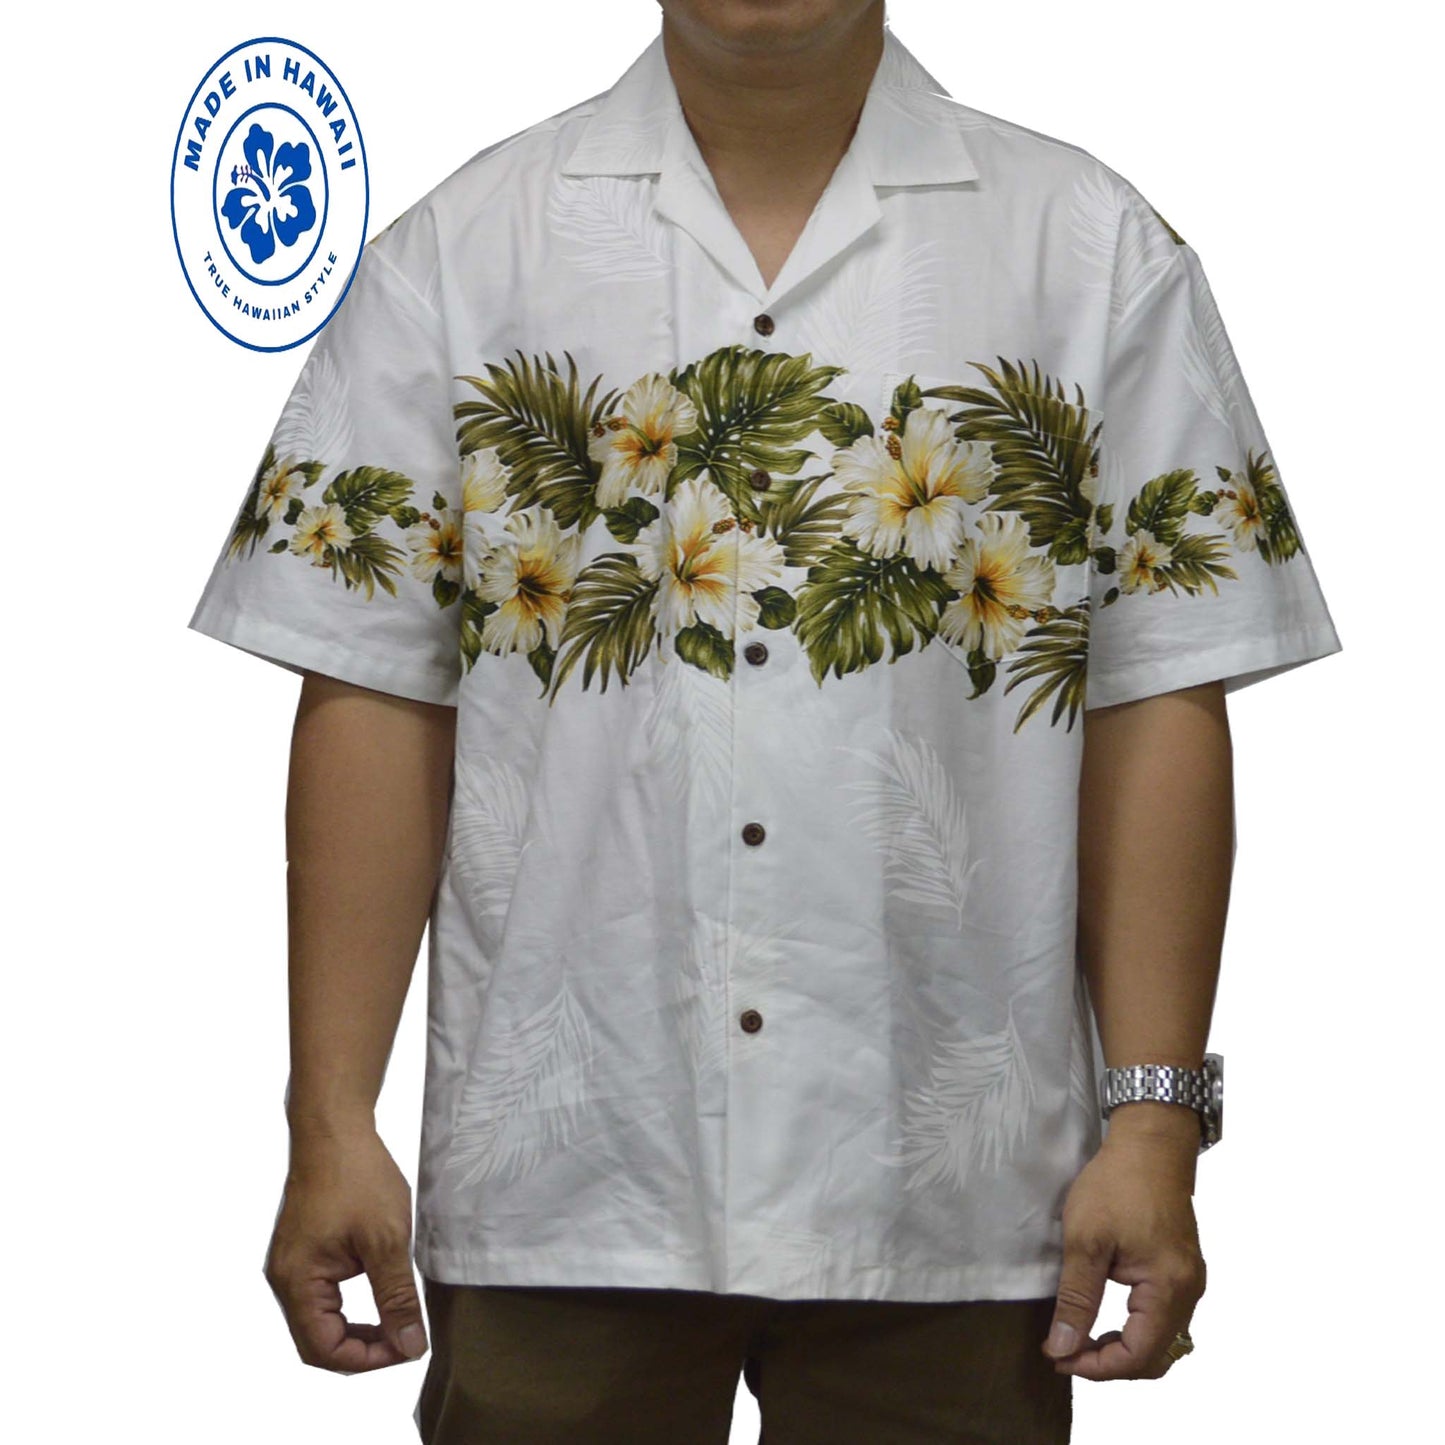 Ky's Hawaiian Cotton Shirt Original Hibiscus - White